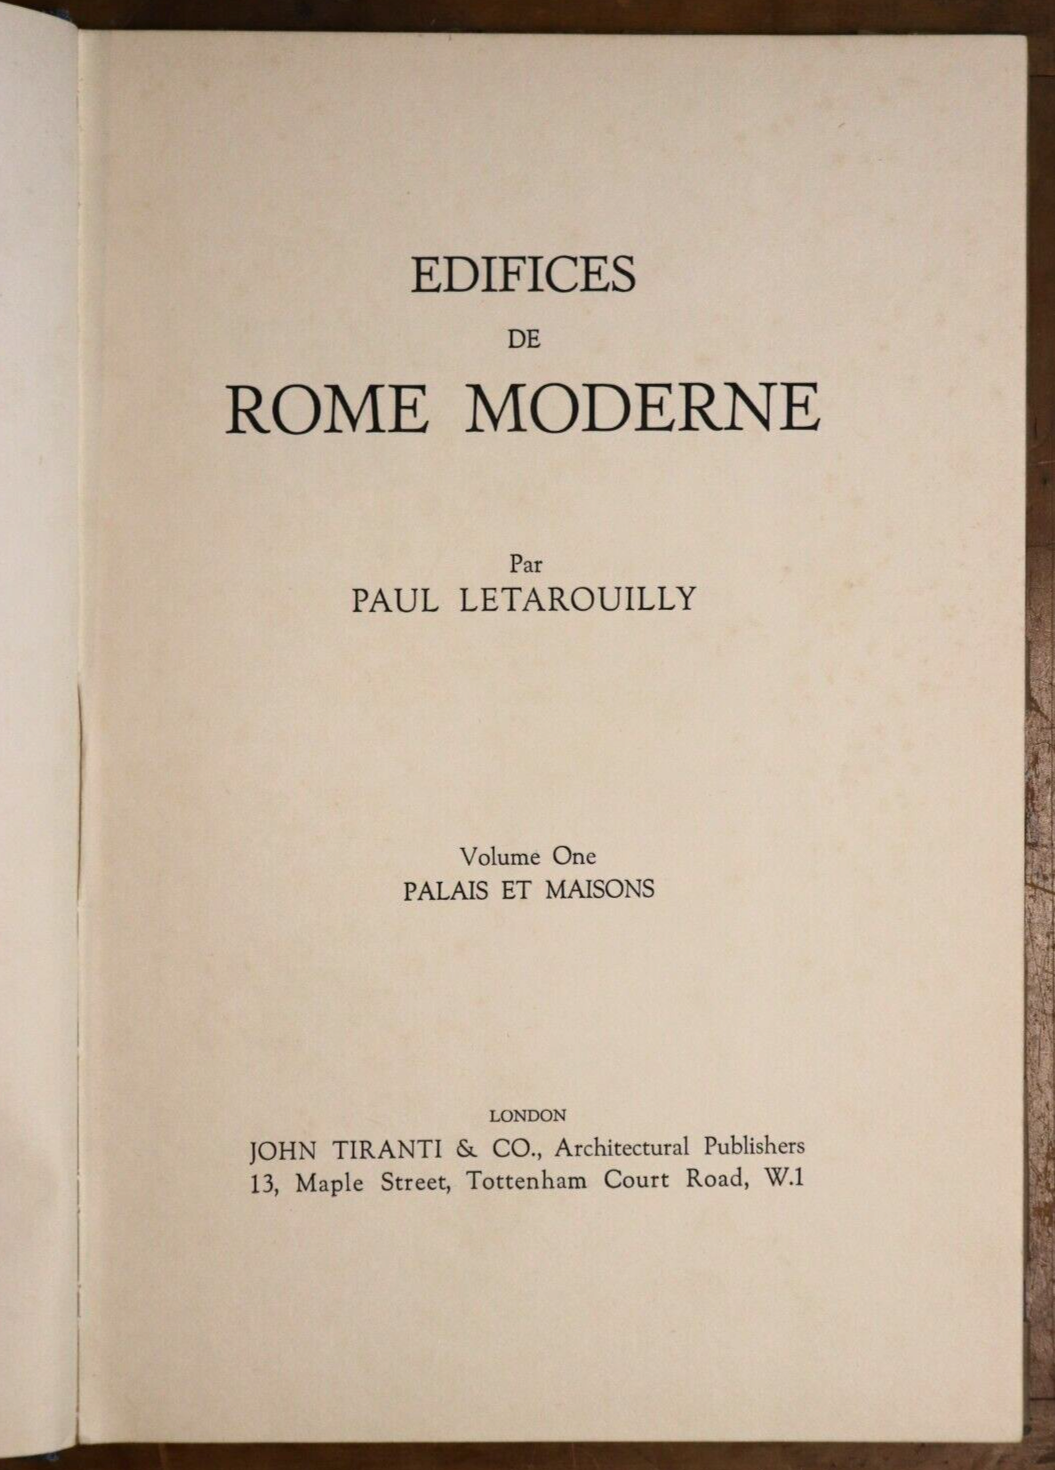 1928 4vol Edifices De Rome Moderne by Paul Letarouilly Architectural Books - 0